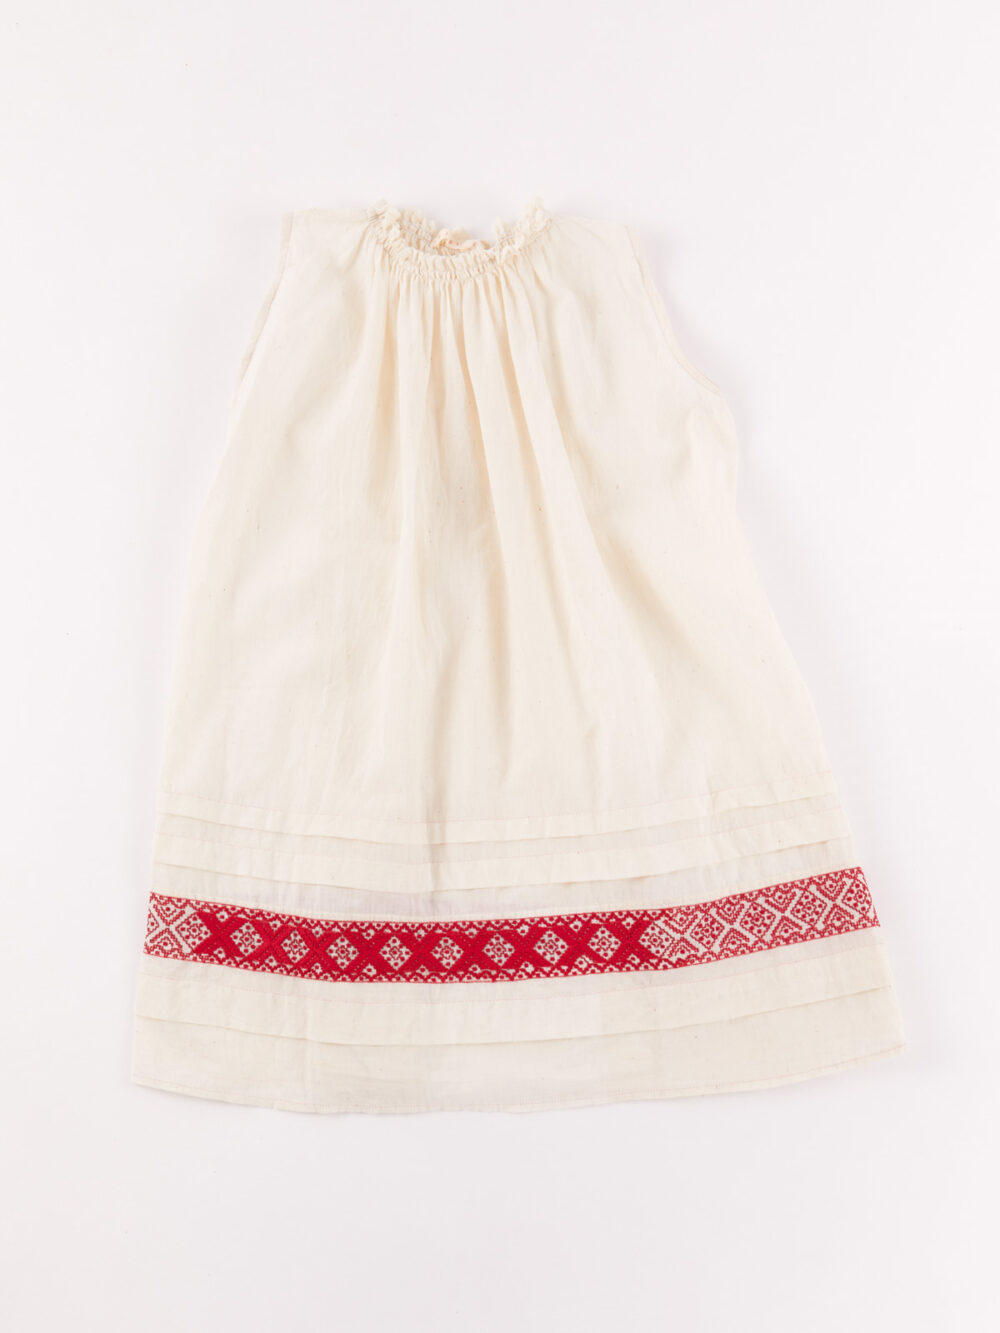 injiri sleeveless baby dress in ivory with red trim